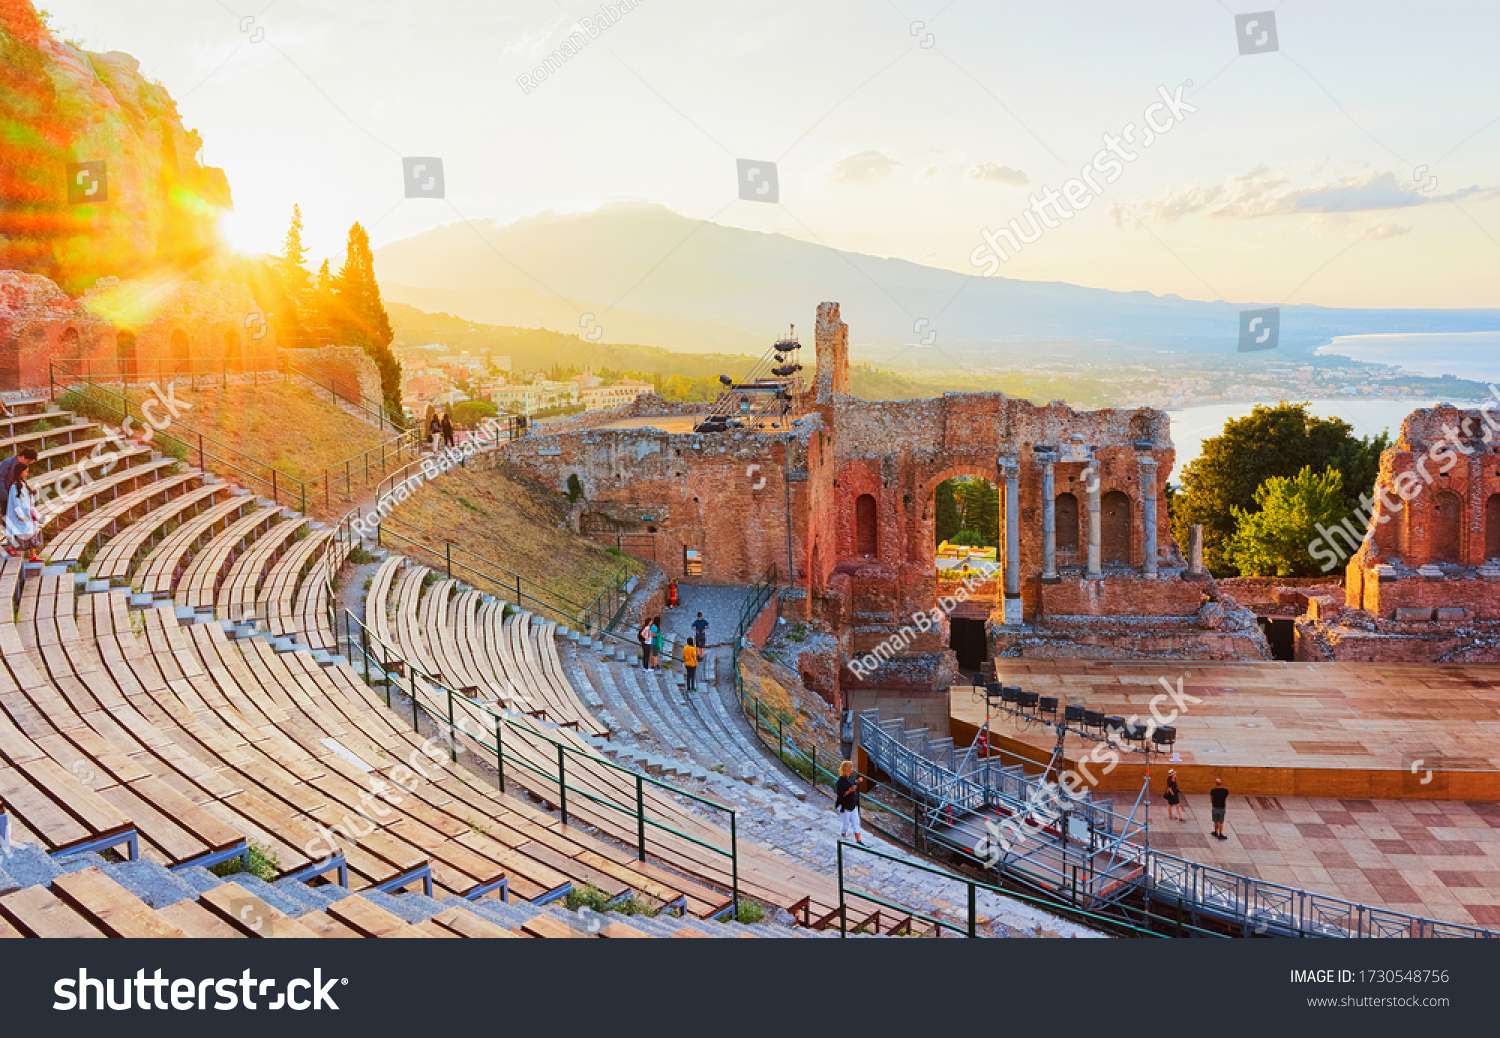 Sunset at Greek theater of Taormina, Sicily, Italy. Travel #1730548756